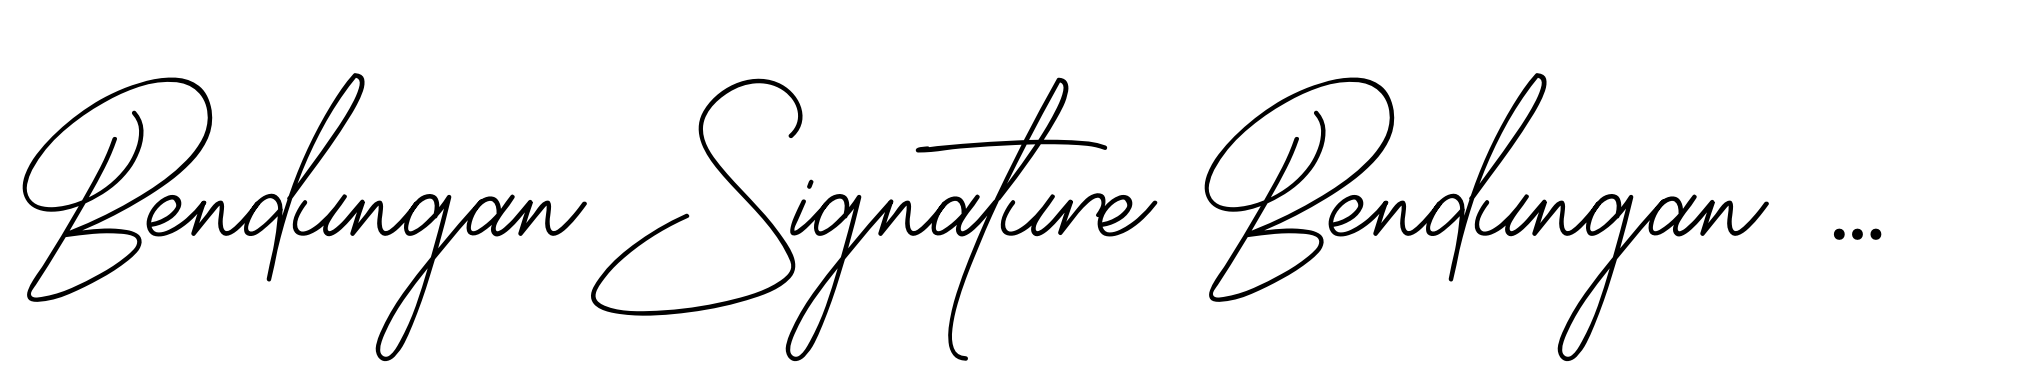 Bendungan Signature Bendungan Signature Handwritten image